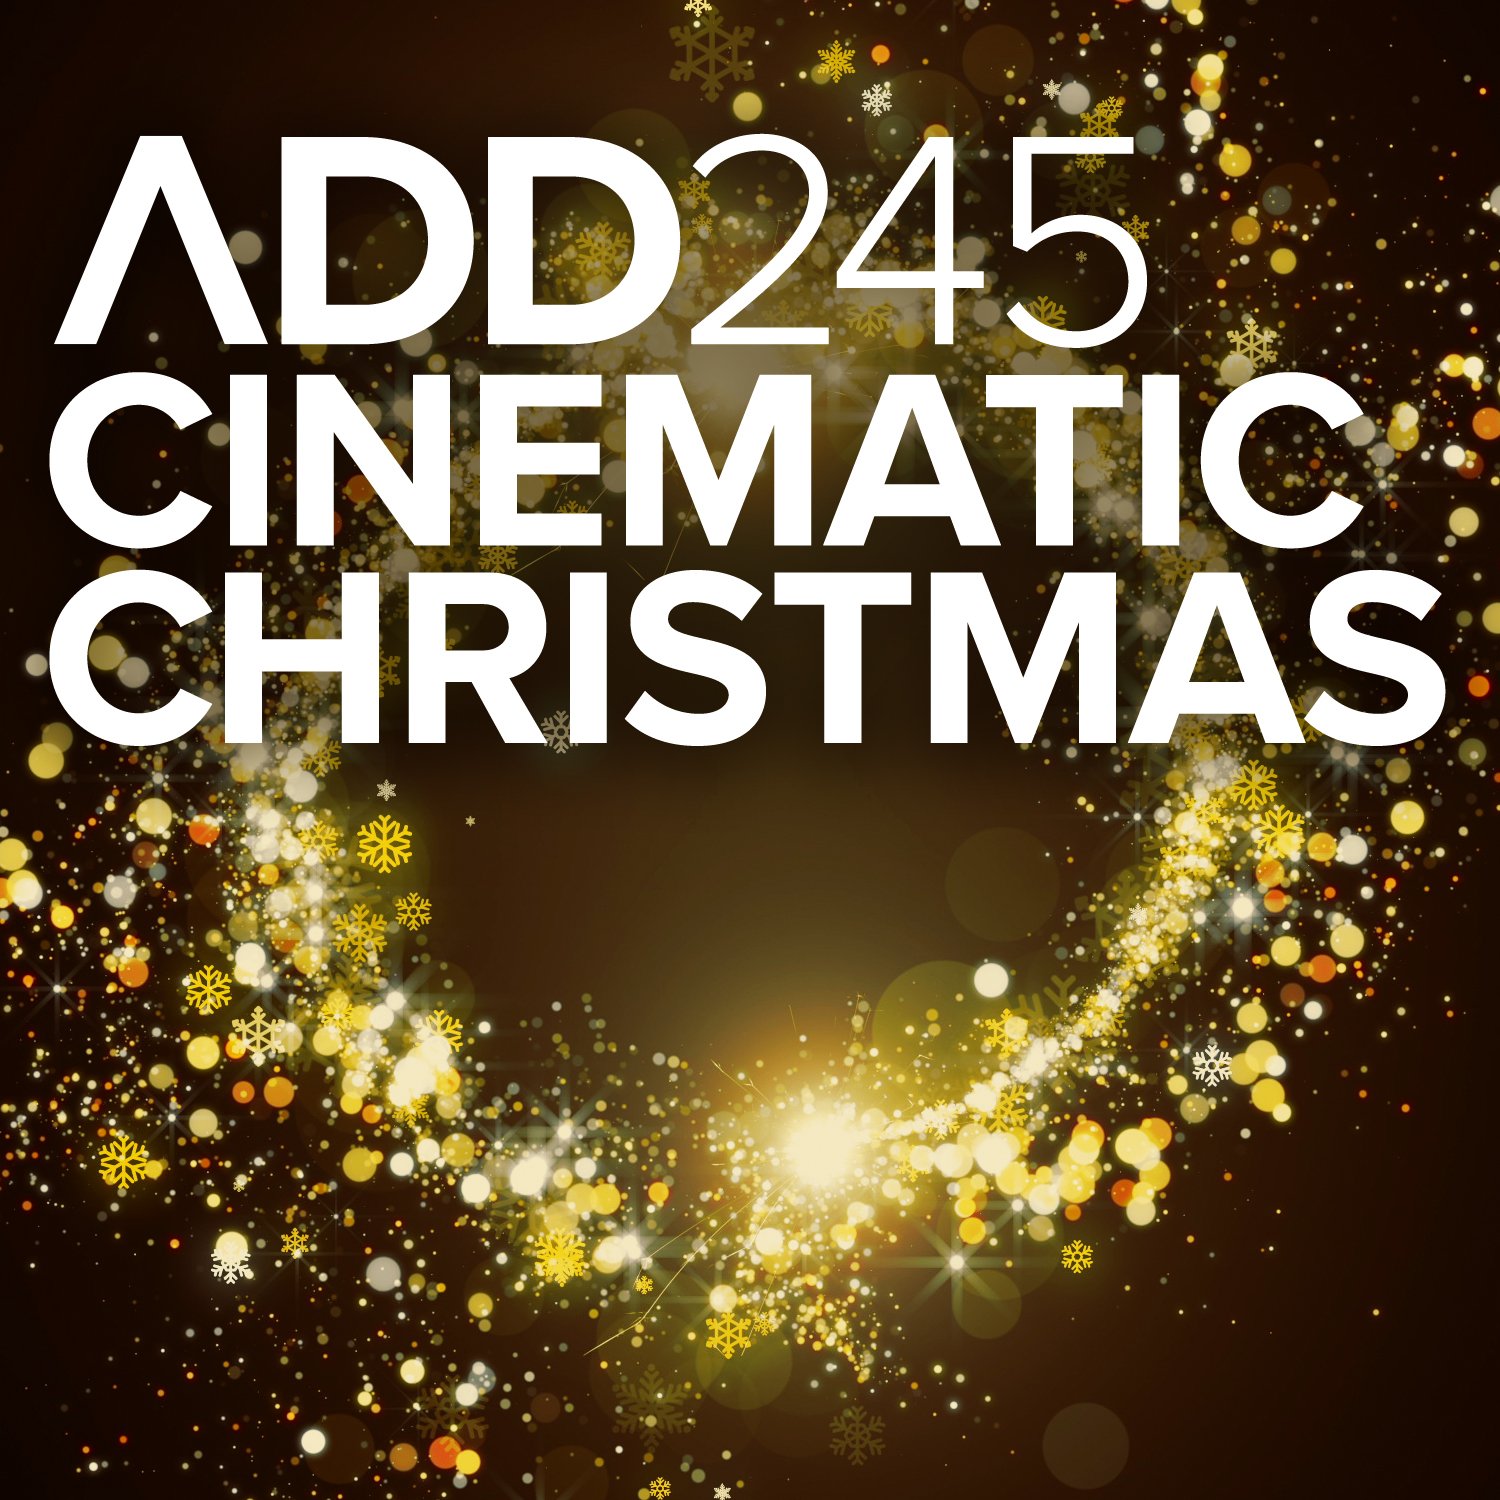 ADD245 CINEMATIC CHRISTMAS_cover.jpg